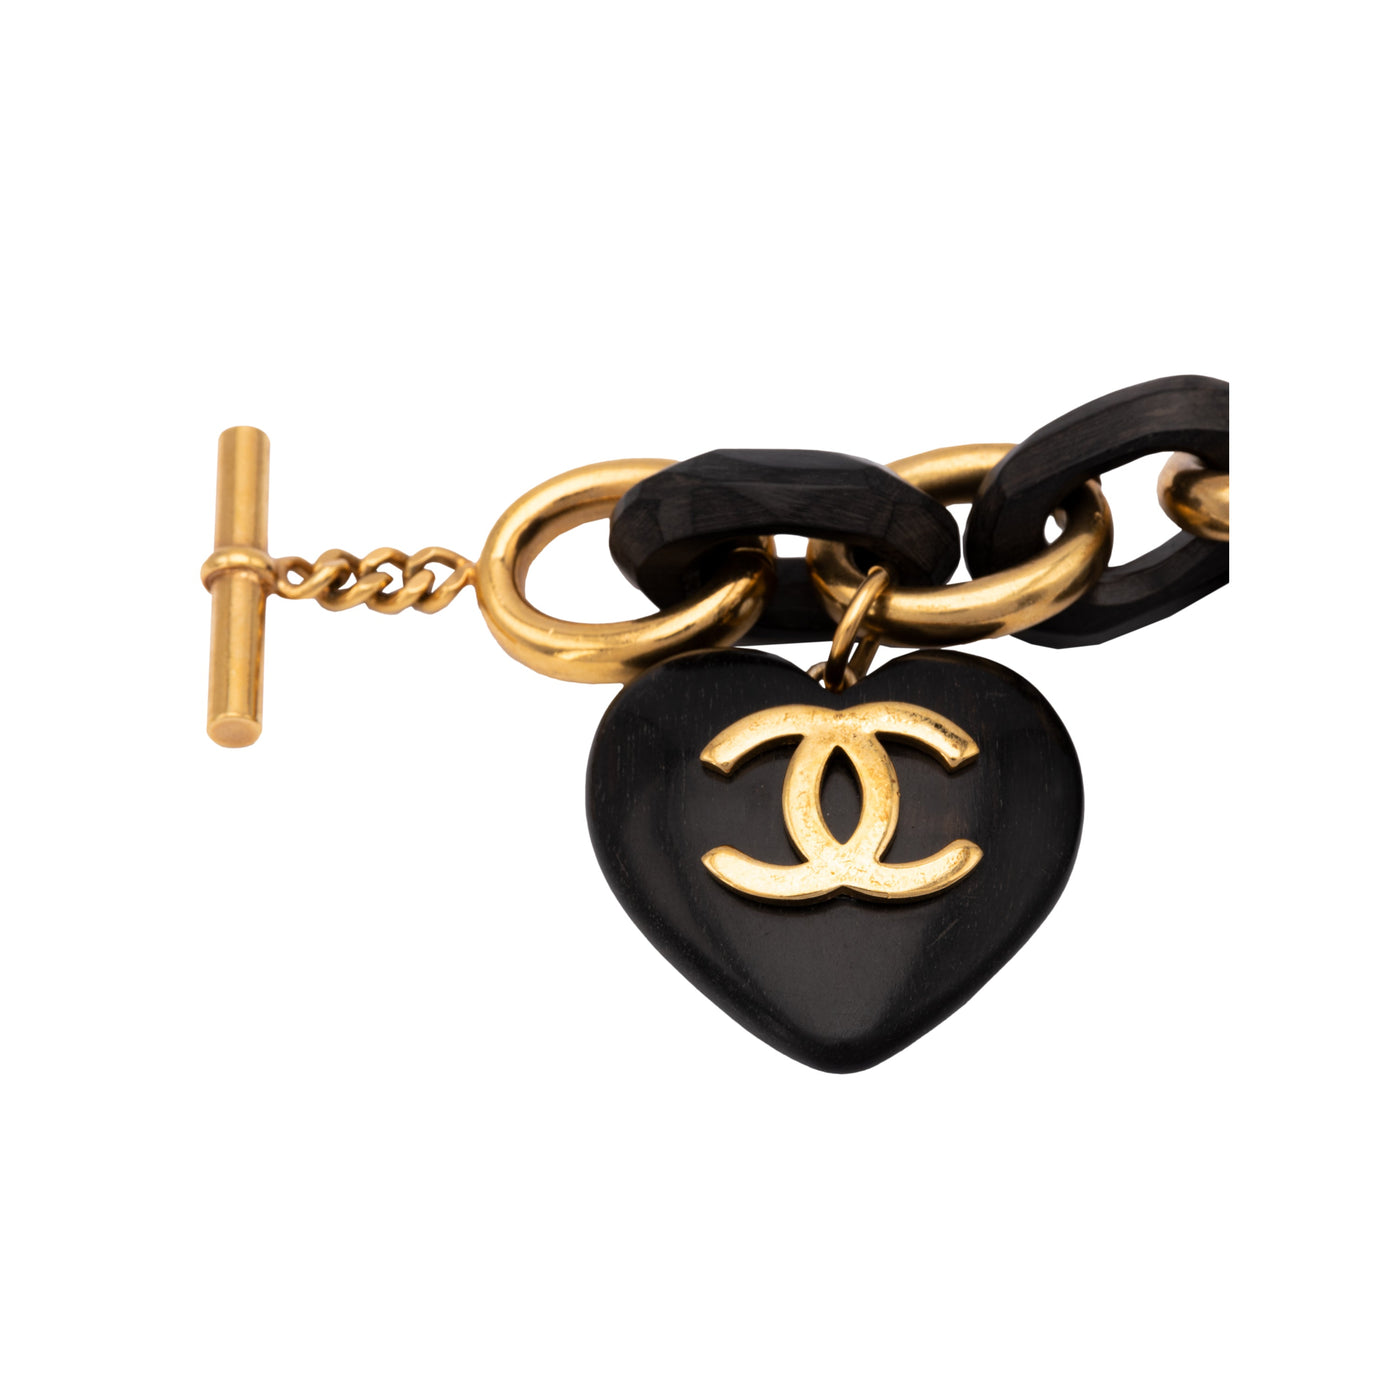 Chanel exquisite black gold wooden heart pendants bracelet embellished rhinestones logo Chain style T-bar fastening pre-owned nft